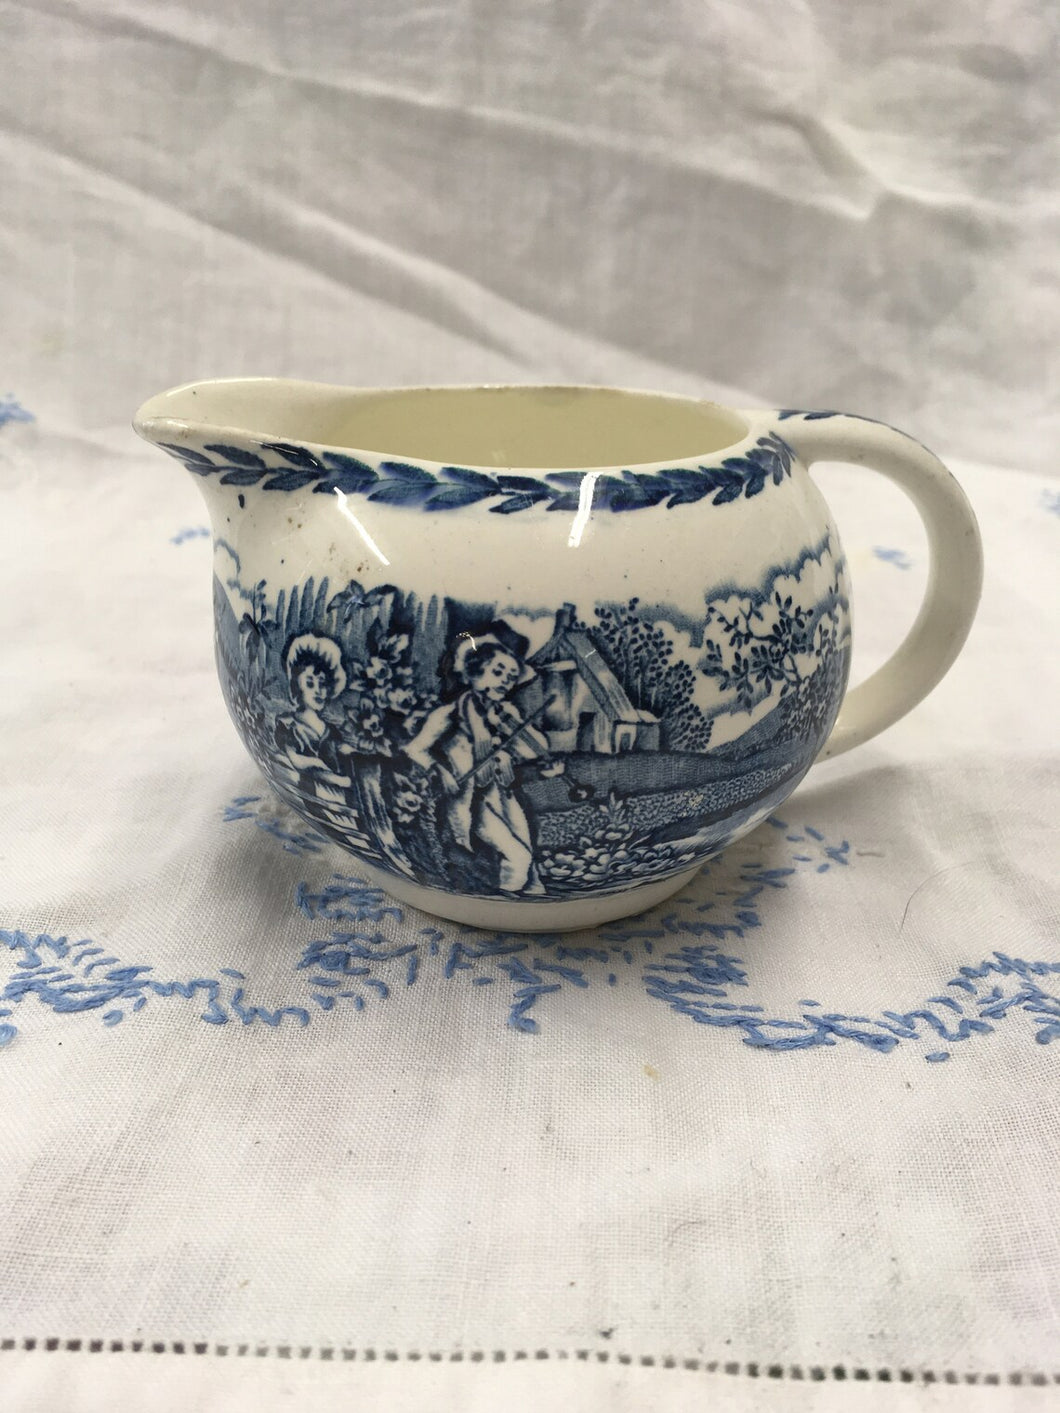 Barratts of Staffordshire Blue & White, Creamer milk jug c.1898 made in England Trademark Barratts ceramics blue flow c1920s